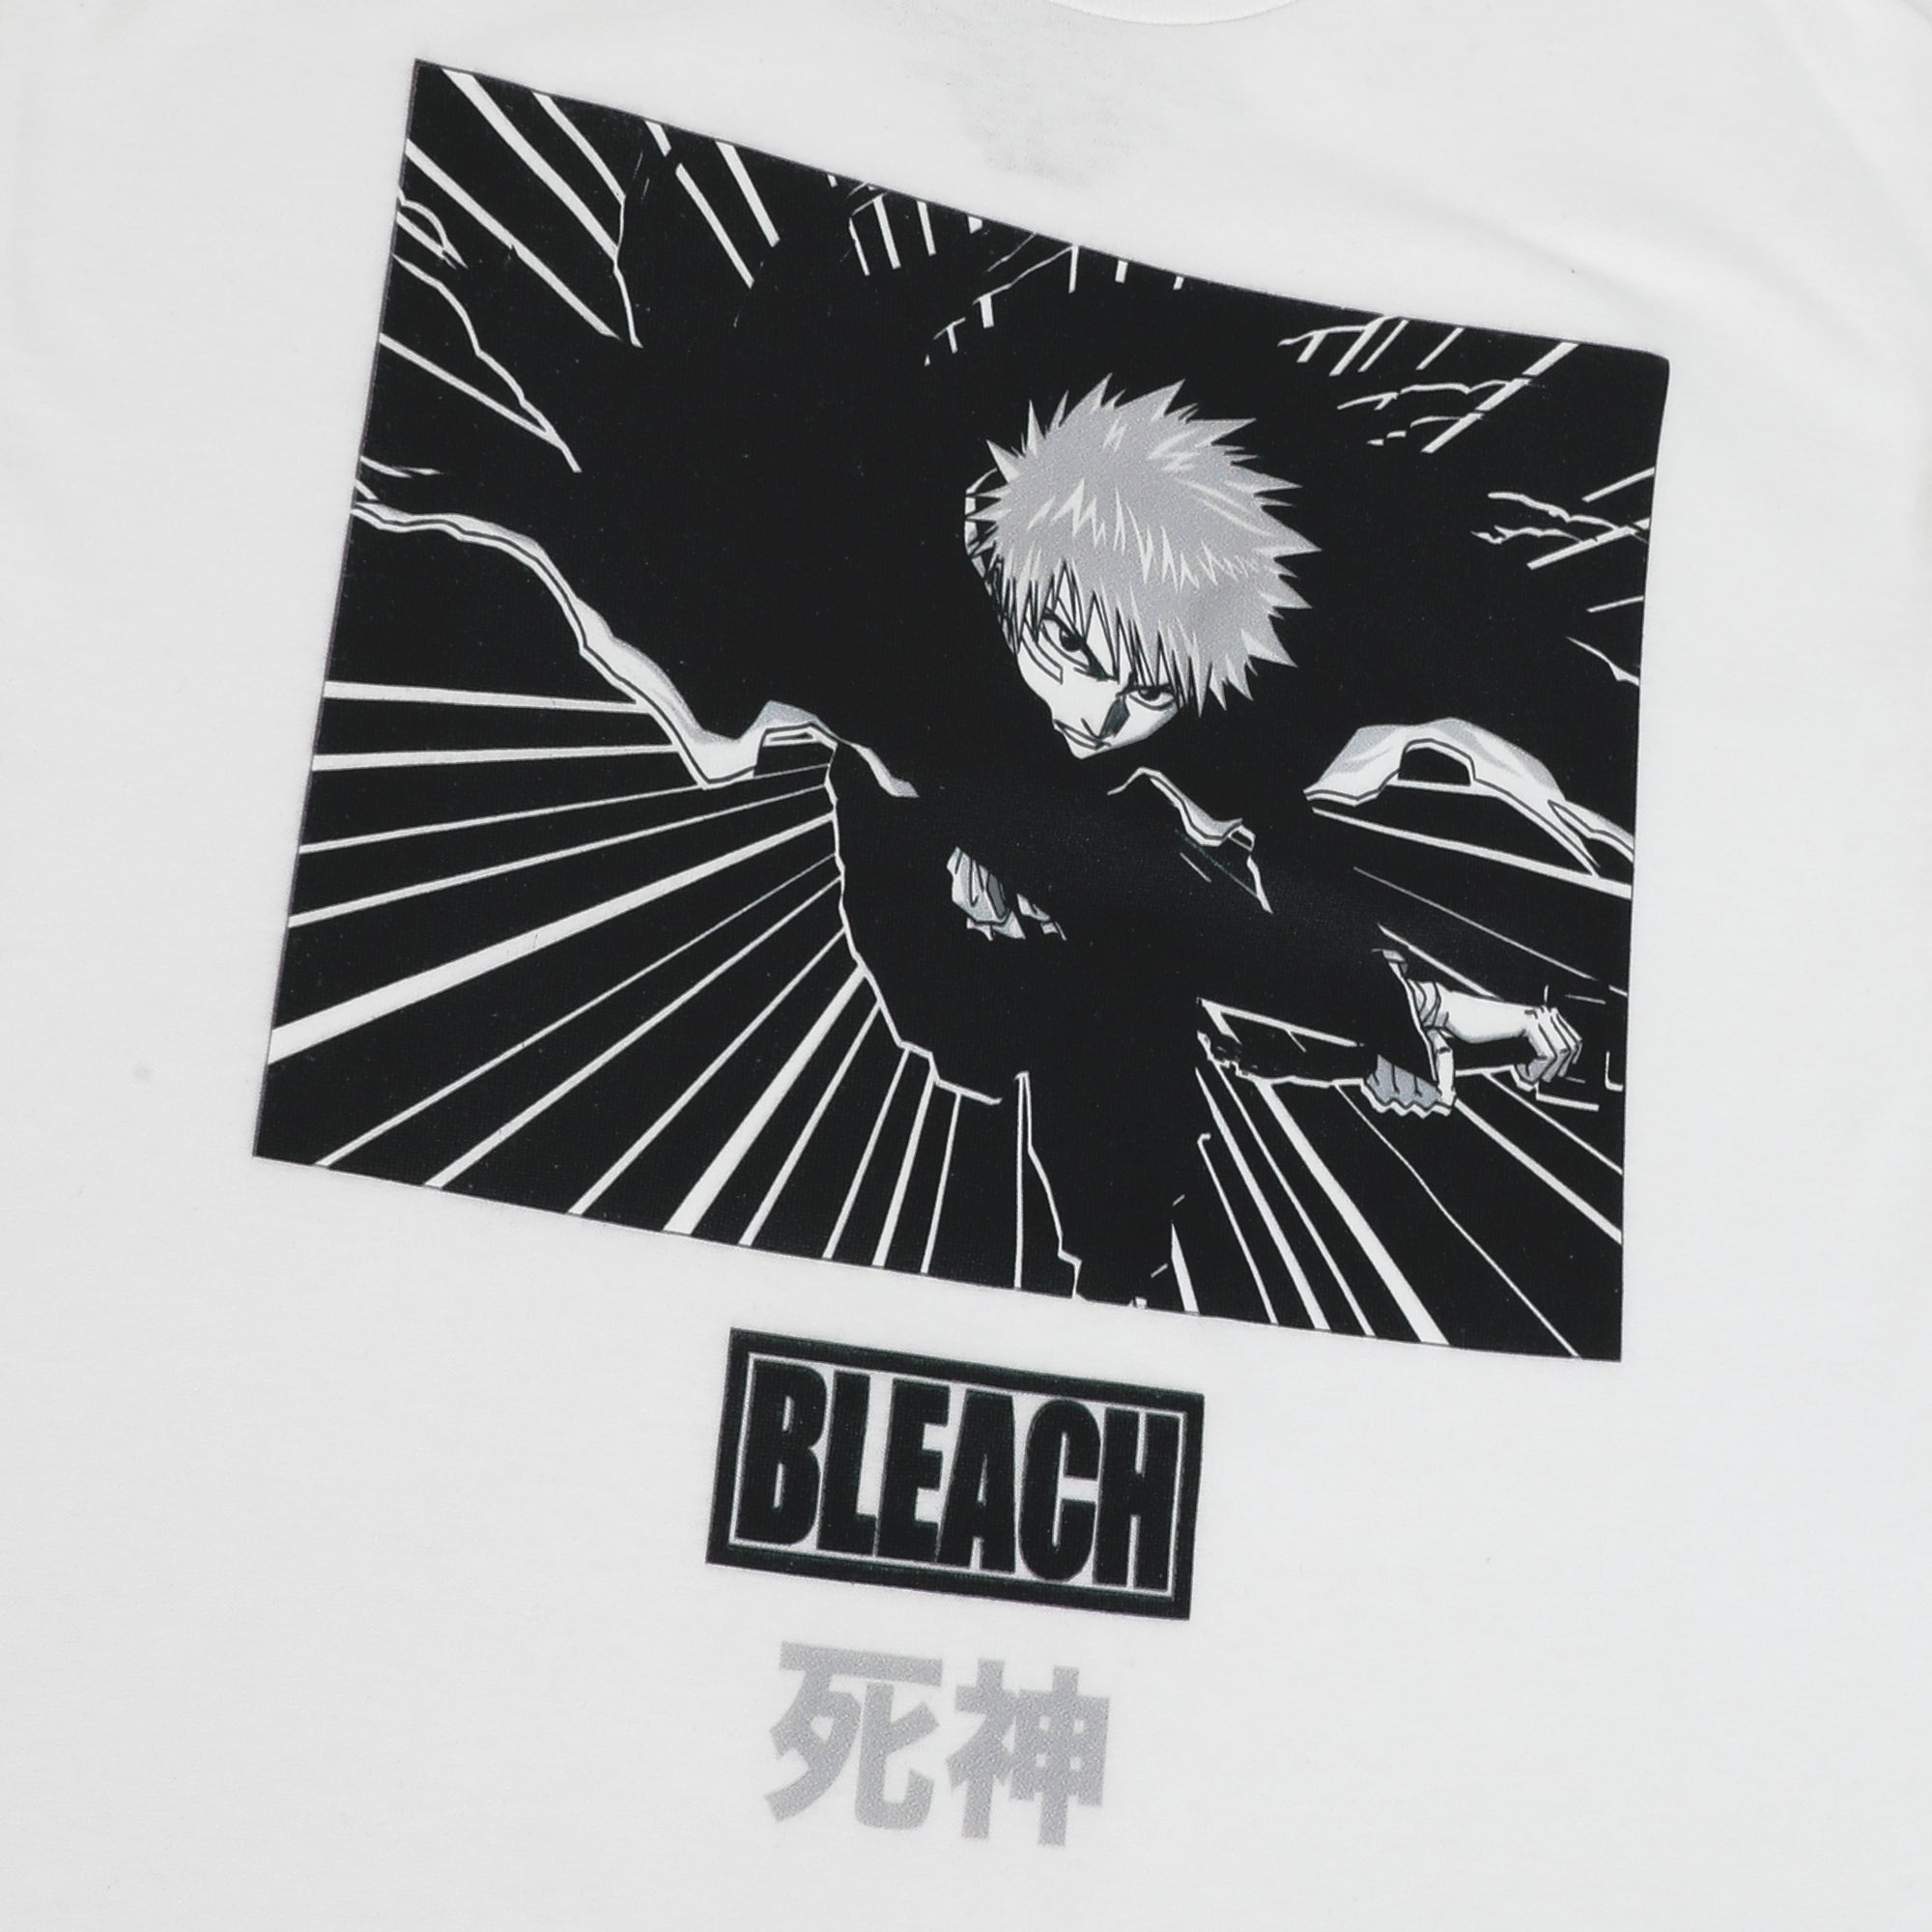 BLEACH - Ichigo Shinigami T-Shirt - Crunchyroll Exclusive